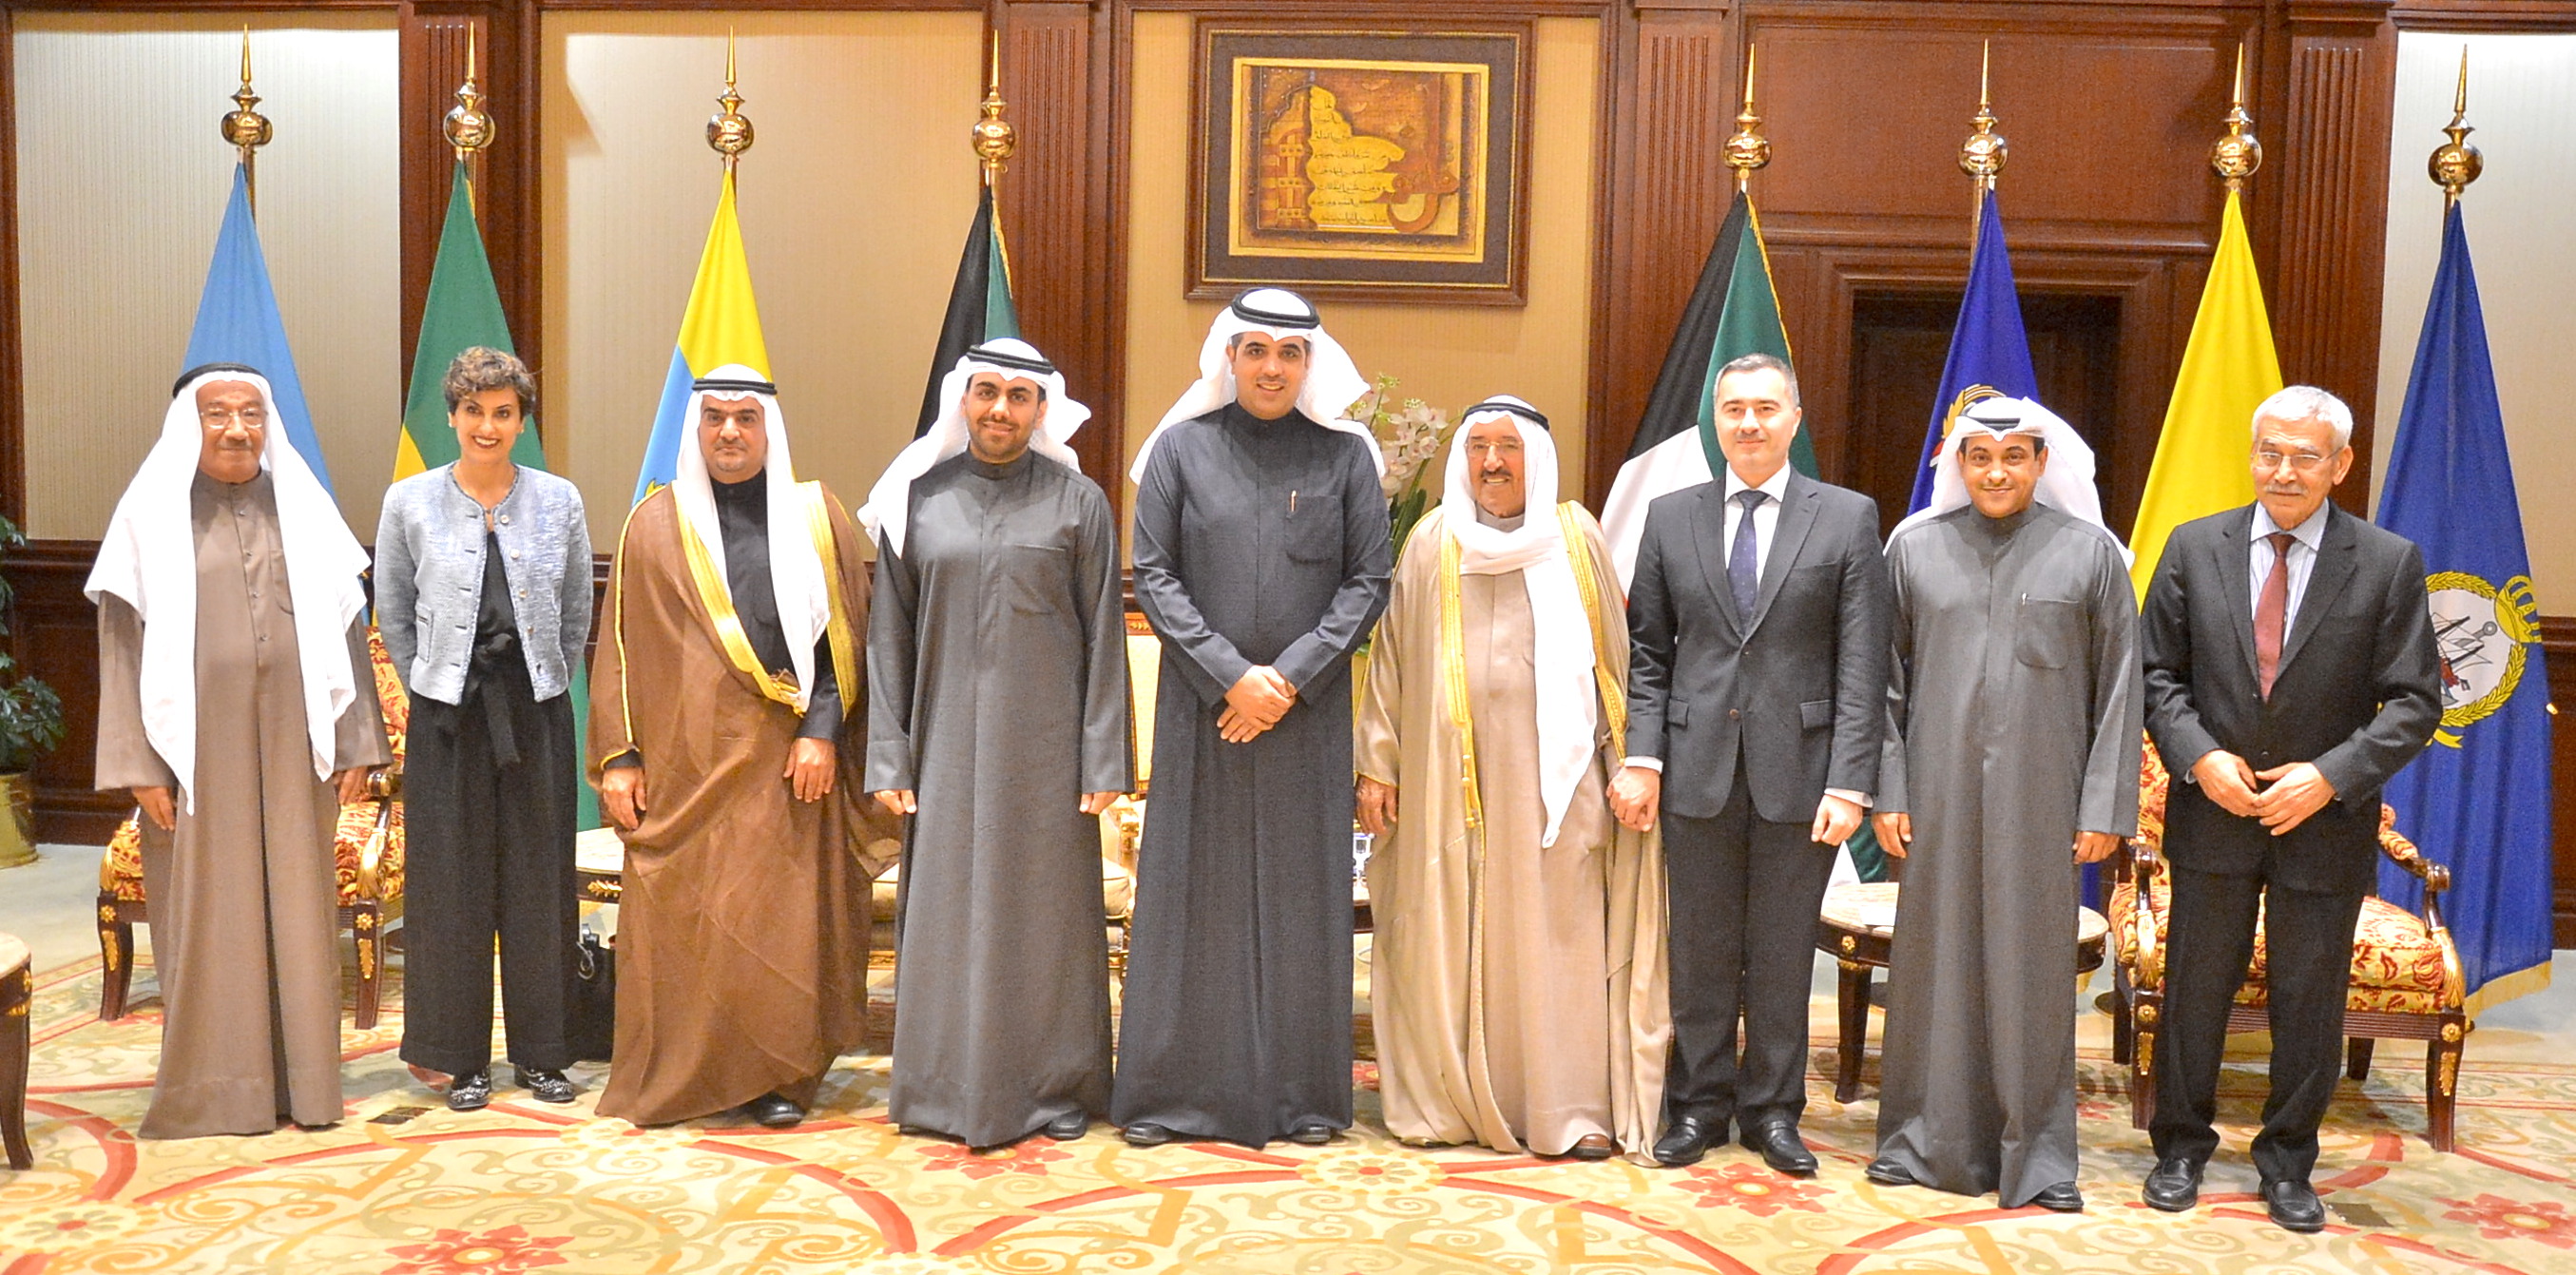 His Highness the Amir Sheikh Sabah Al-Ahmad Al-Jaber Al-Sabah received (KFAS) Director General Dr. Adnan Shehab Eddin and winners of the 2017 KFAS Awards